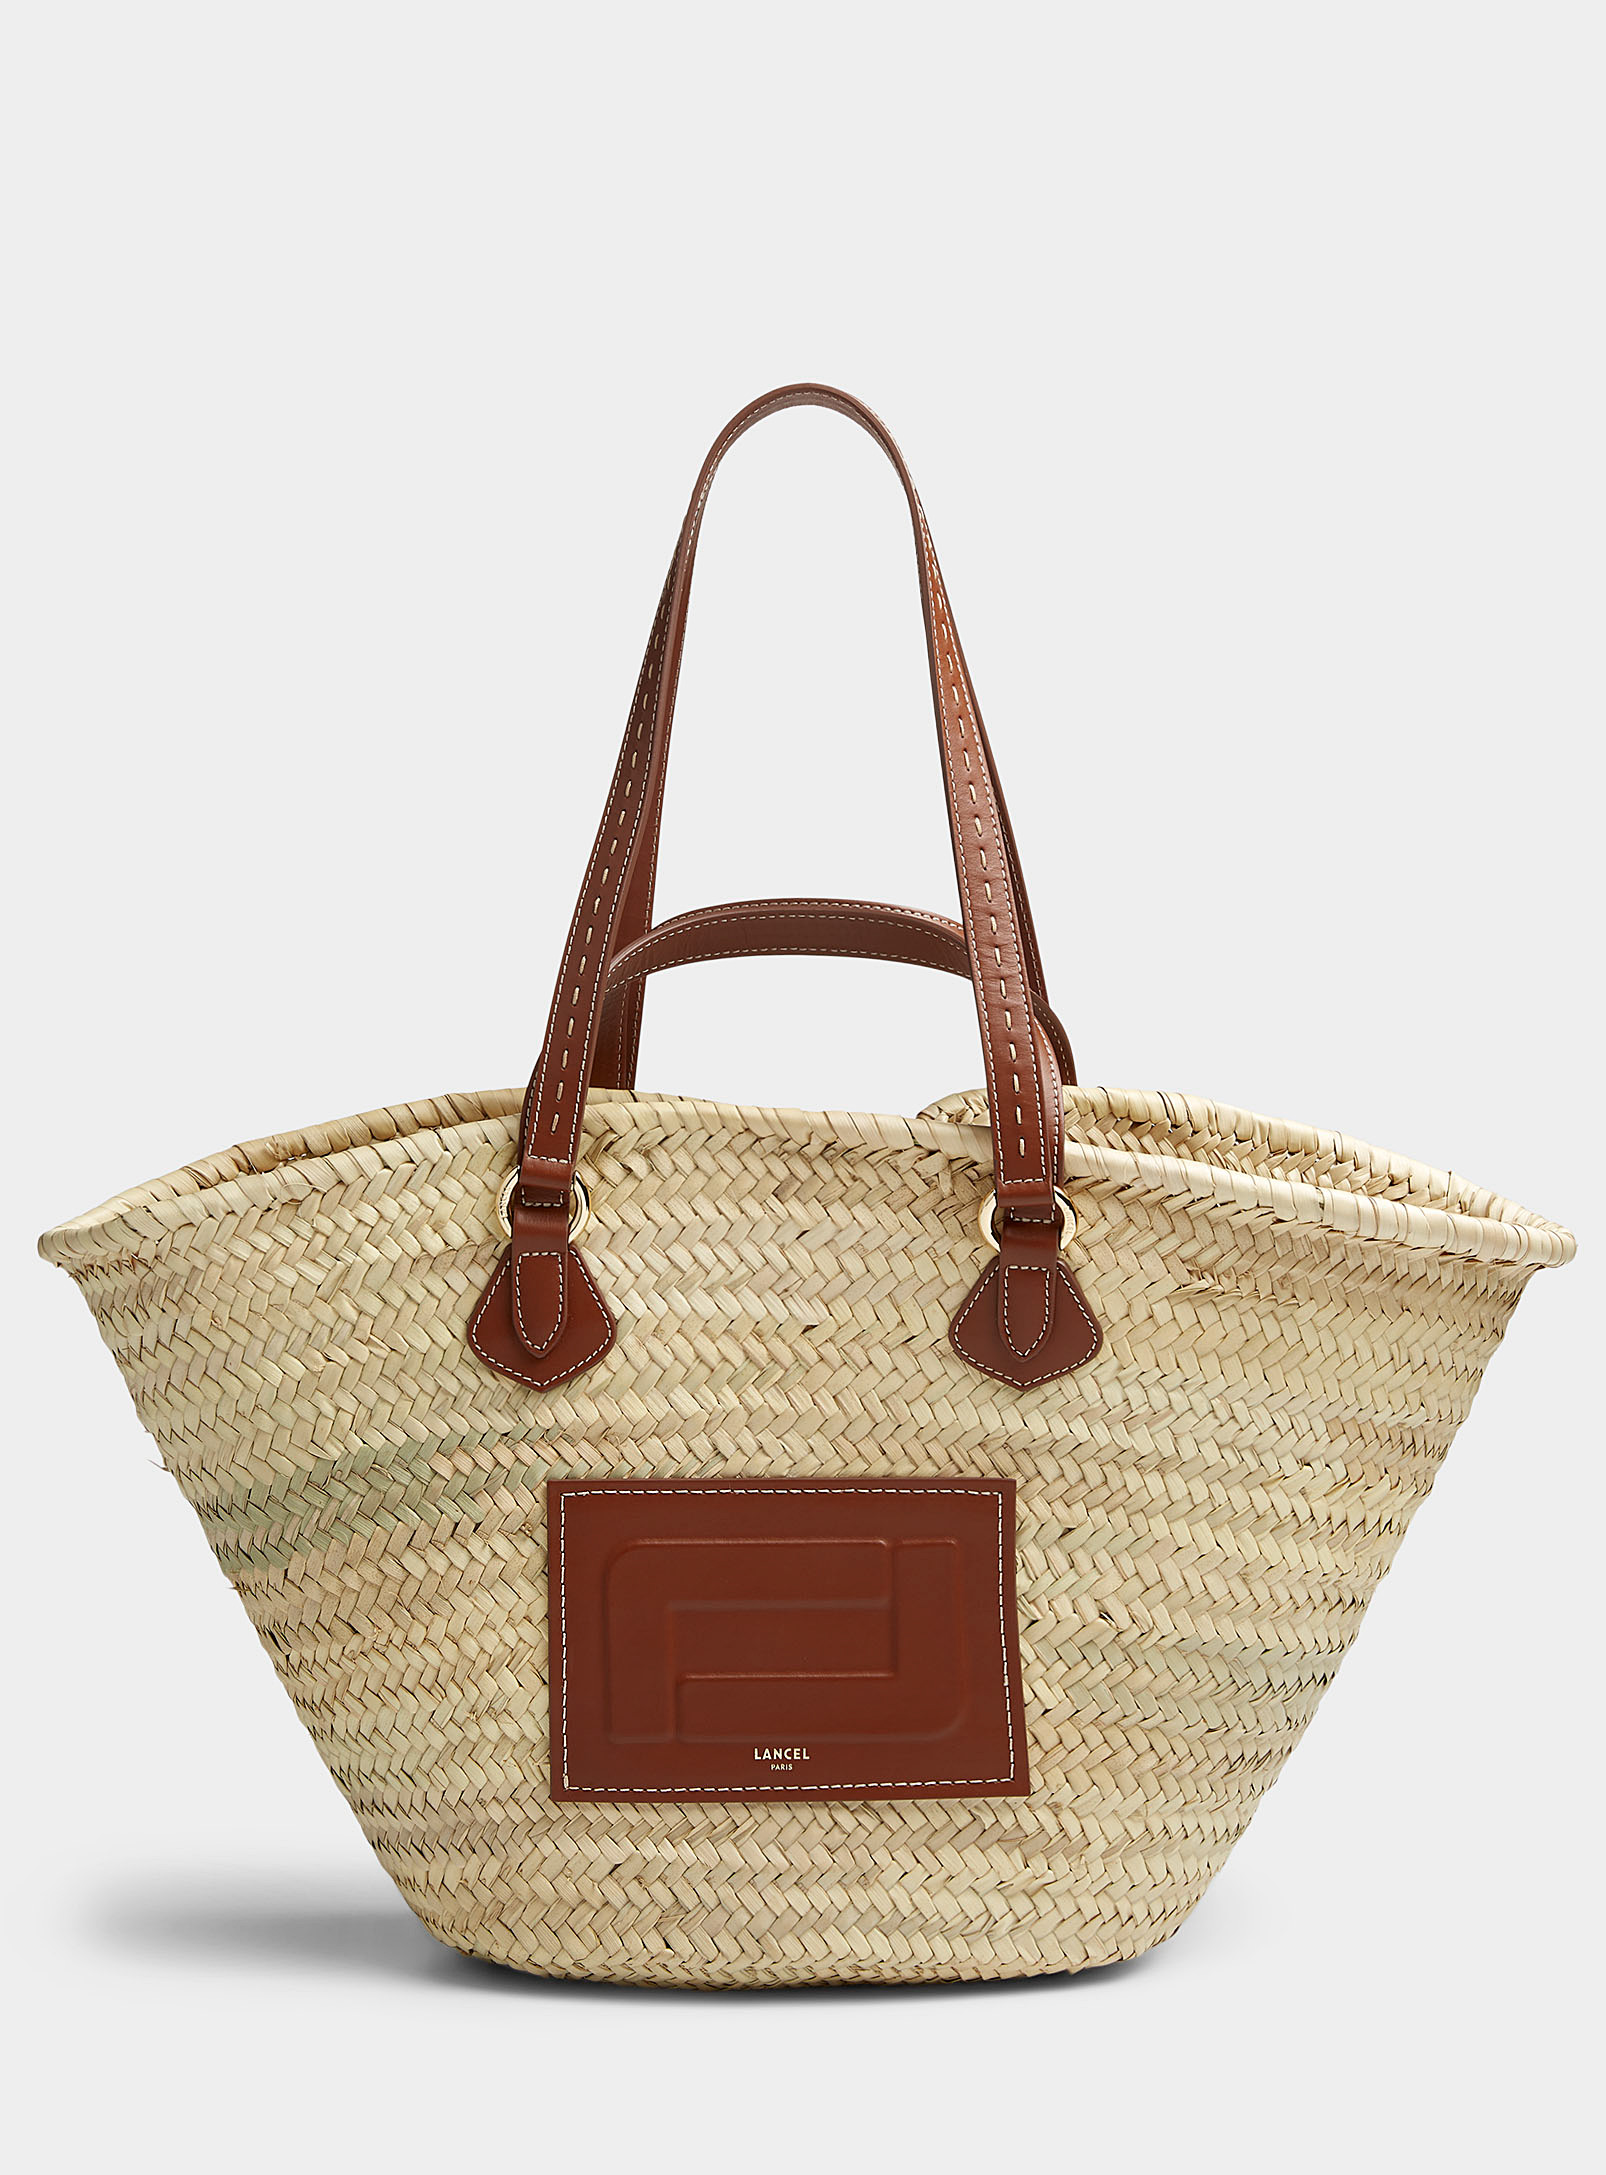 Lancel Medium Summer Mania Tote Bag In Patterned Brown